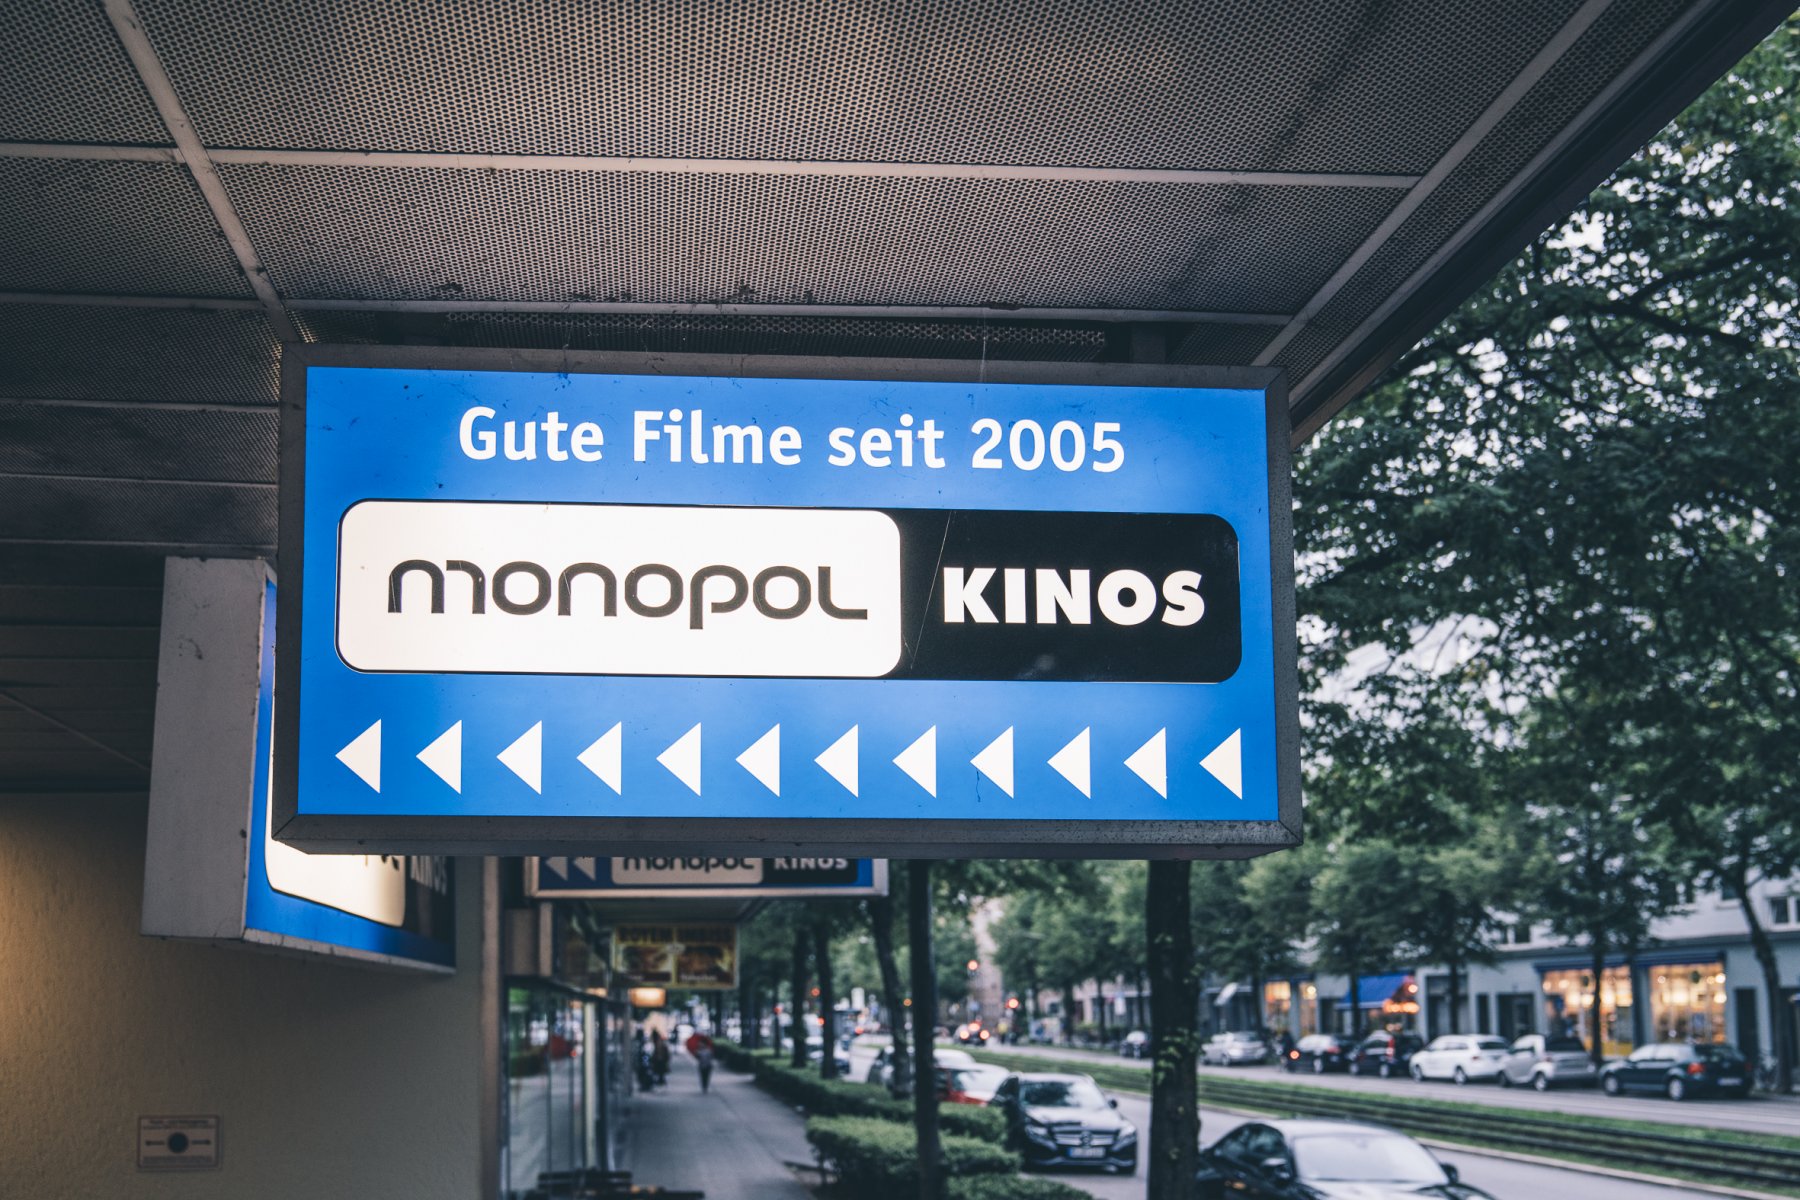 Geheimtipp Muenchen Monopol Kino 13082019 1 – ©wunderland media GmbH